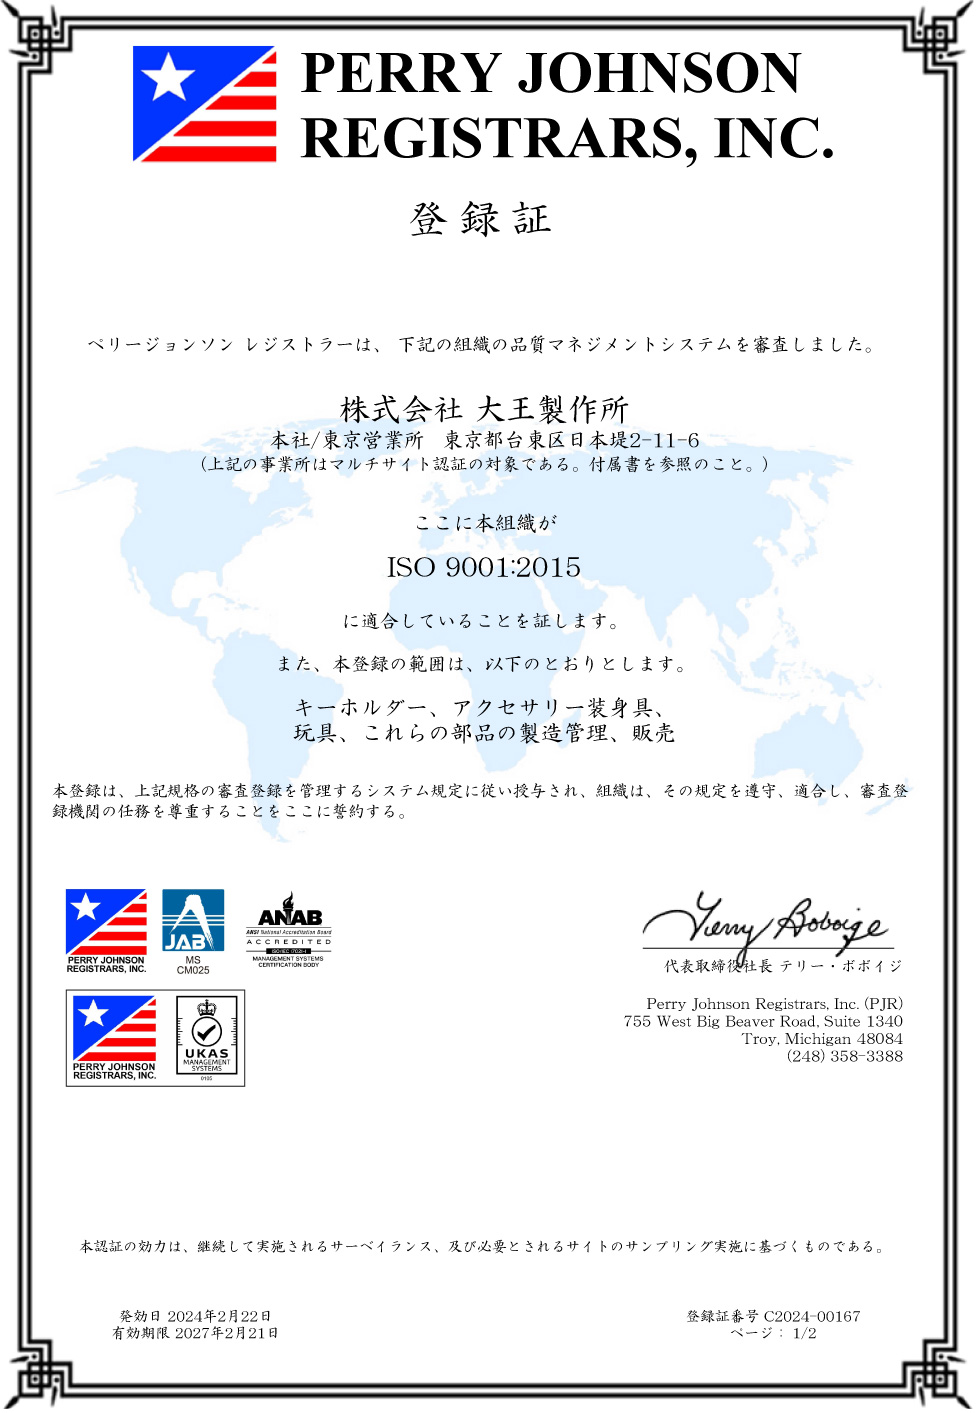 ISO9001 registration certificate